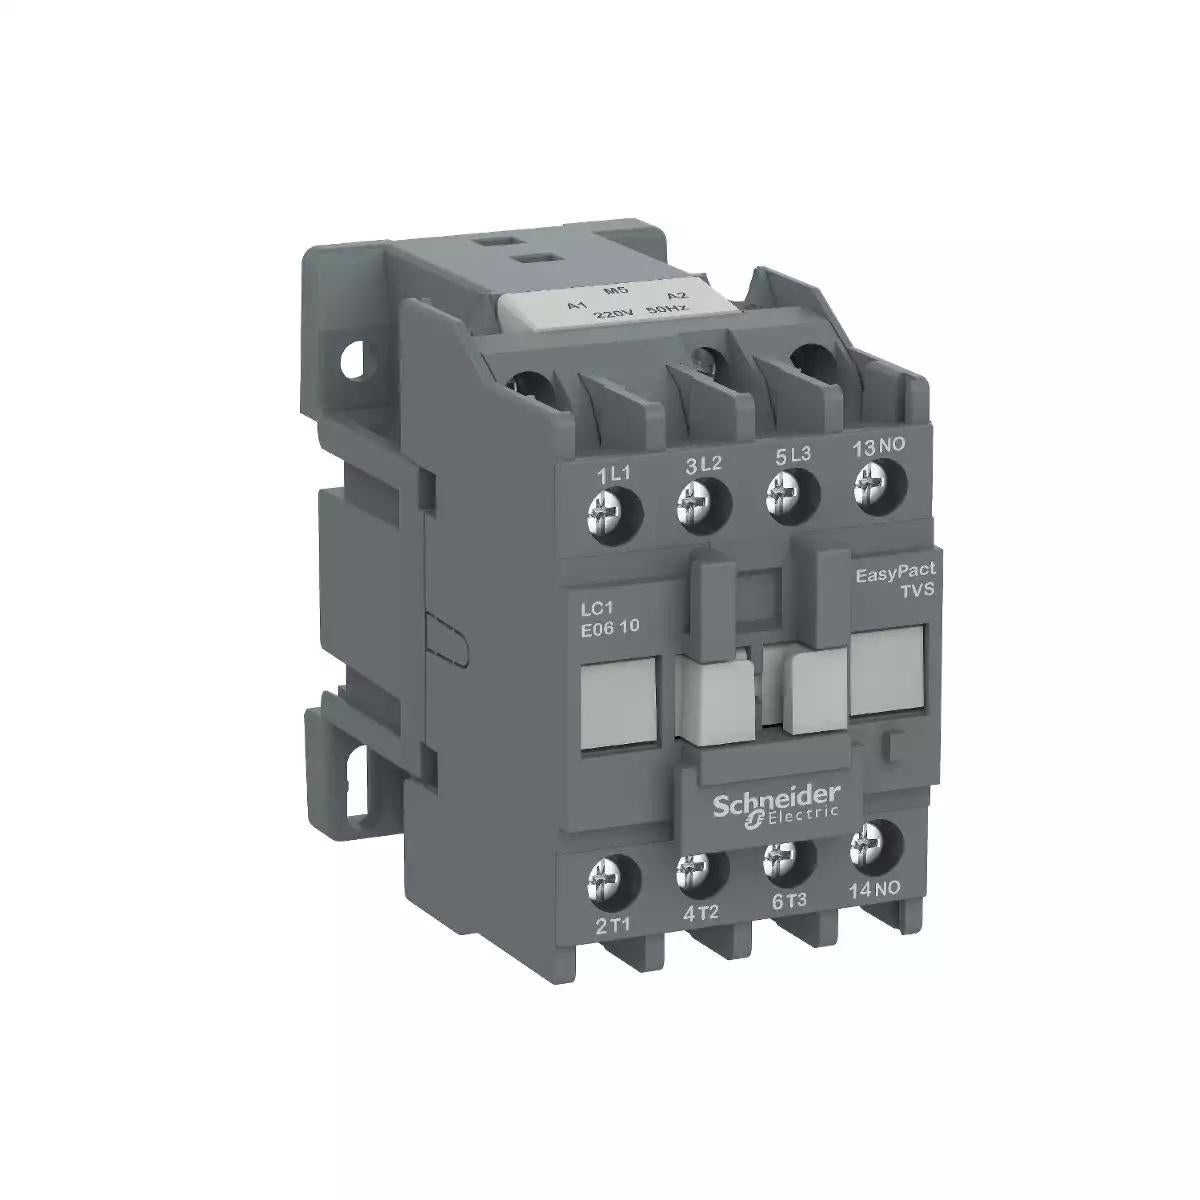 Contactor,EasyPact TVS,3P(3NO),AC-3,<=440V,9A,24V AC coil,50Hz,1NO auxiliary contact